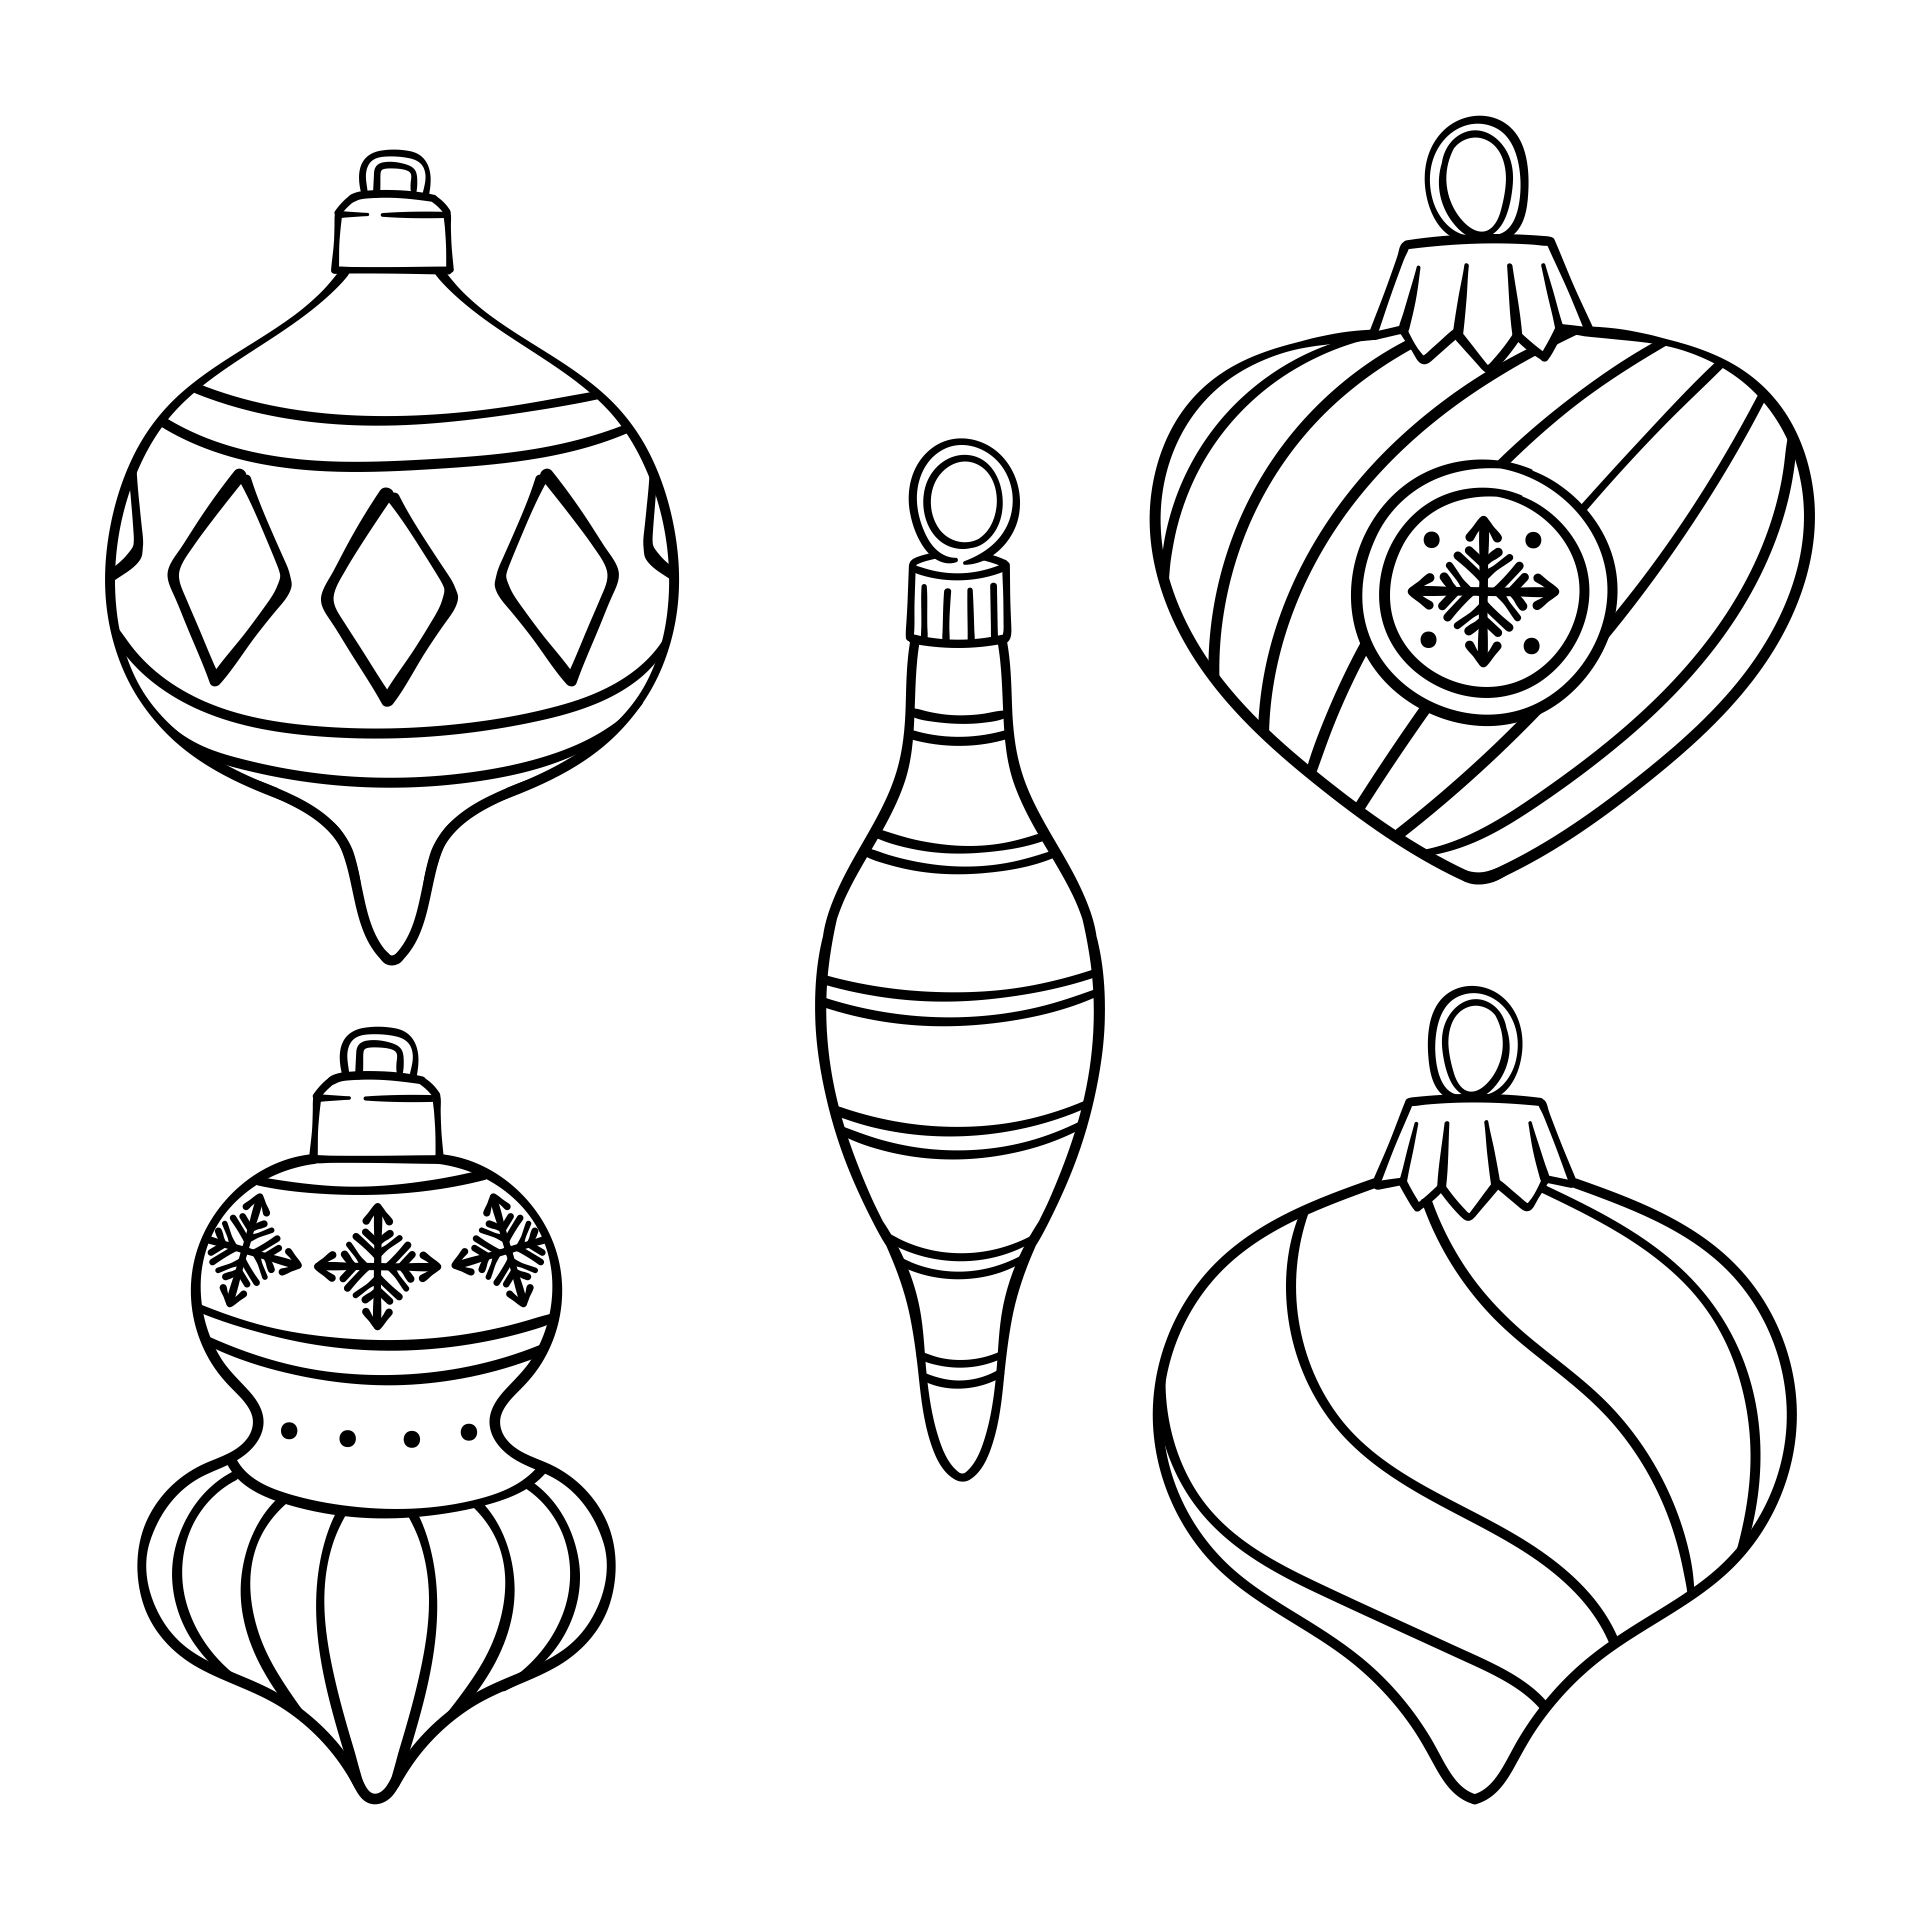 Printable Christmas Ornaments Coloring Page